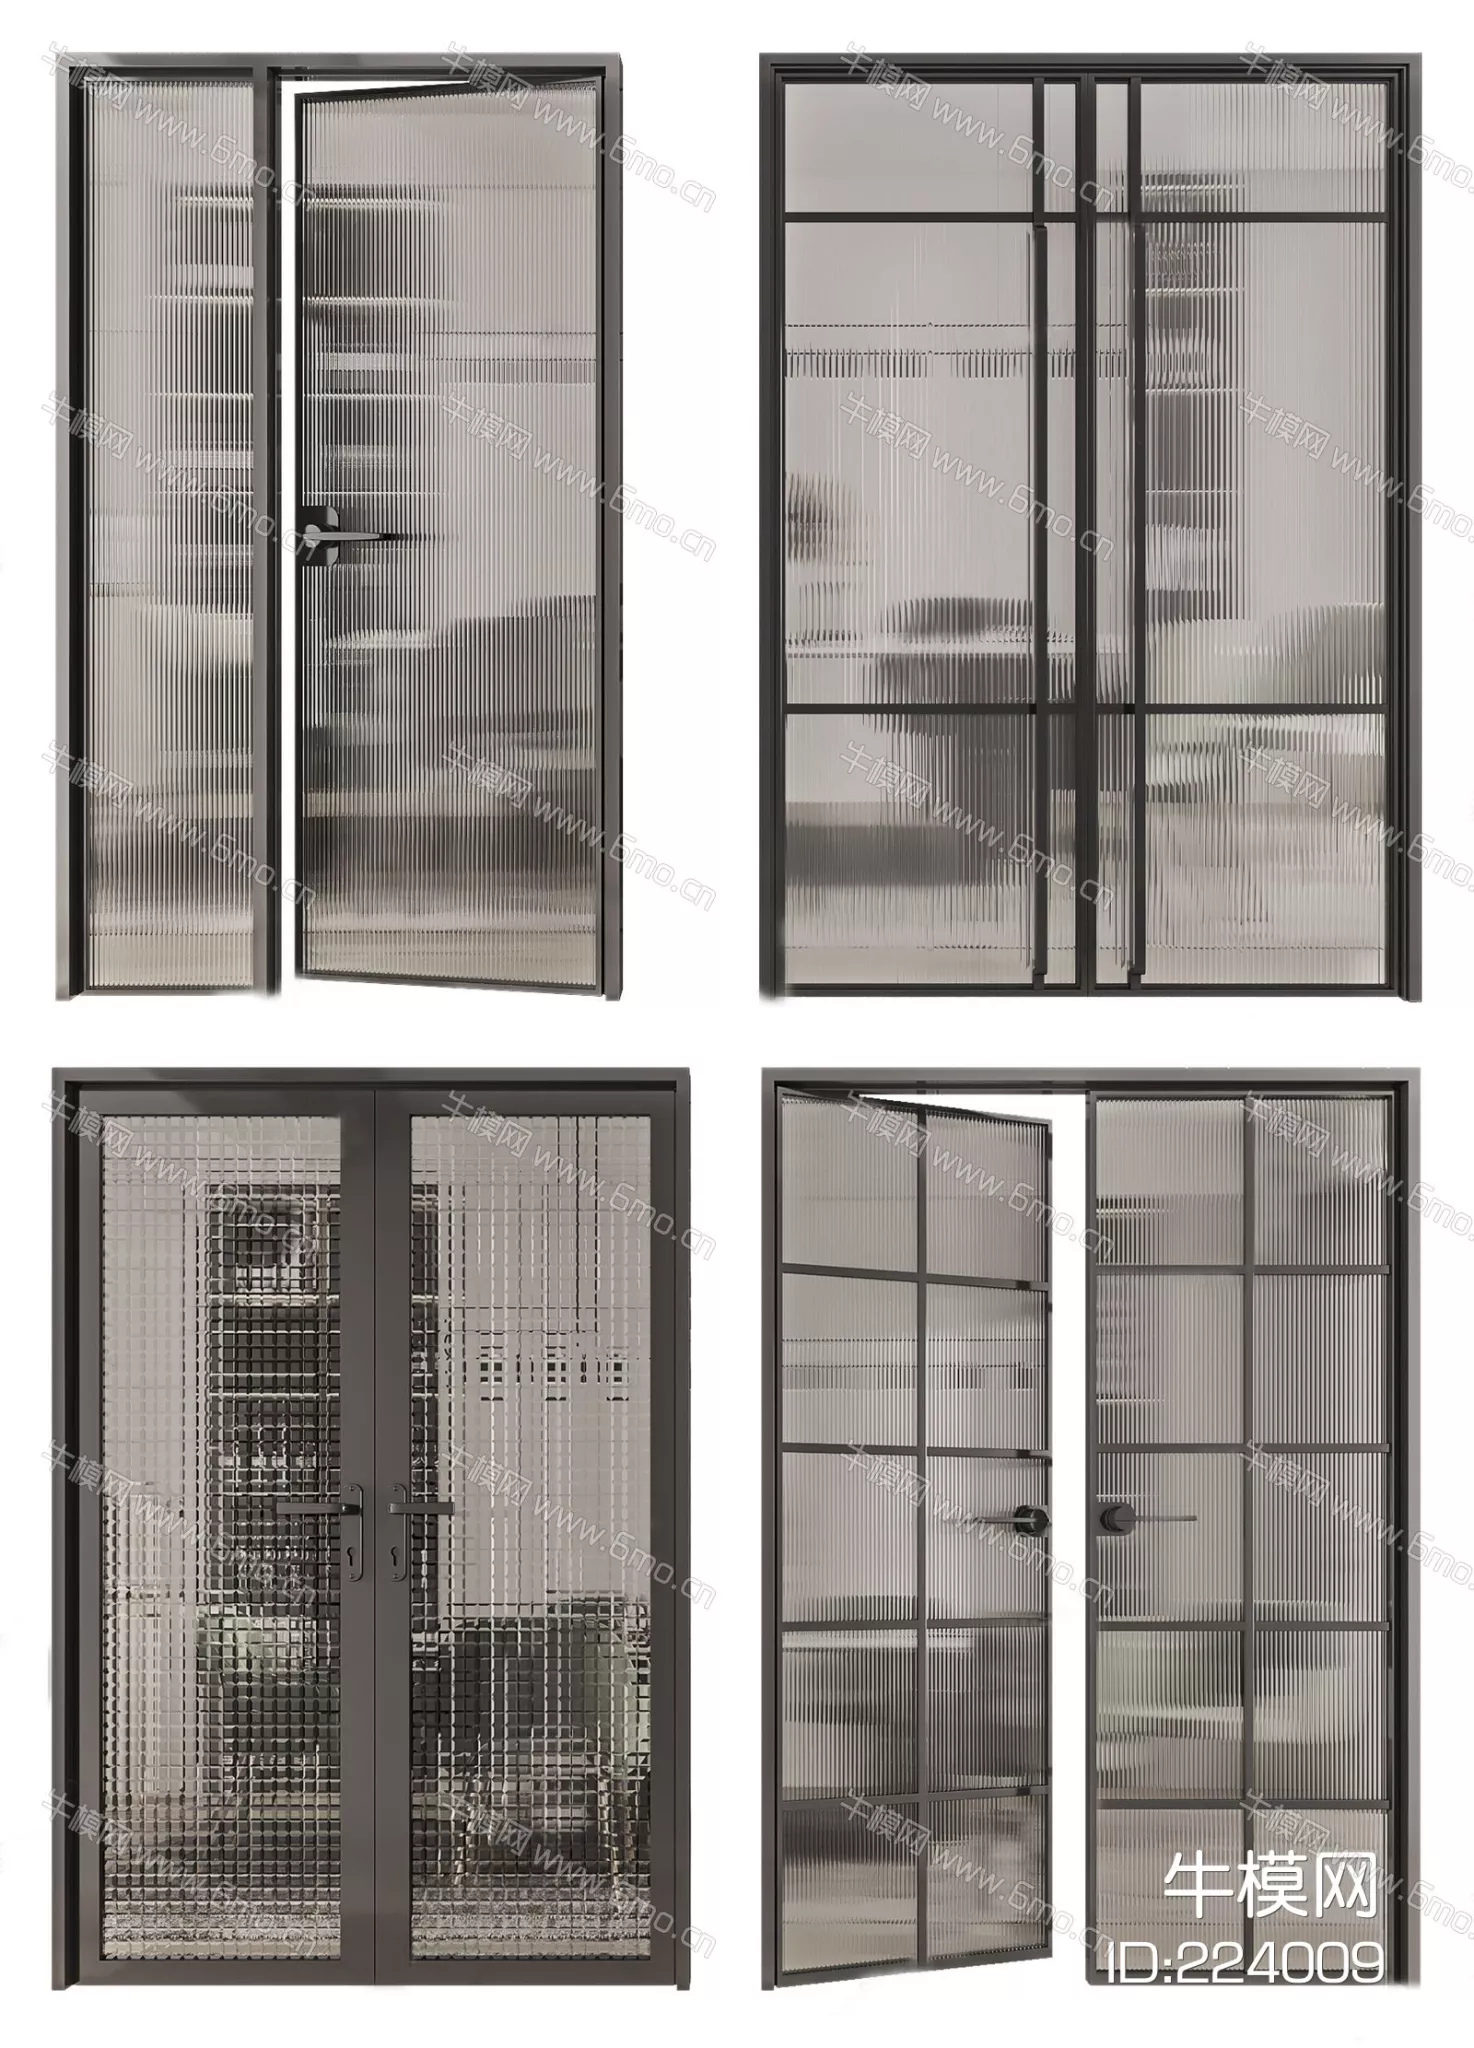 MODERN DOOR AND WINDOWS - SKETCHUP 3D MODEL - ENSCAPE - 224009